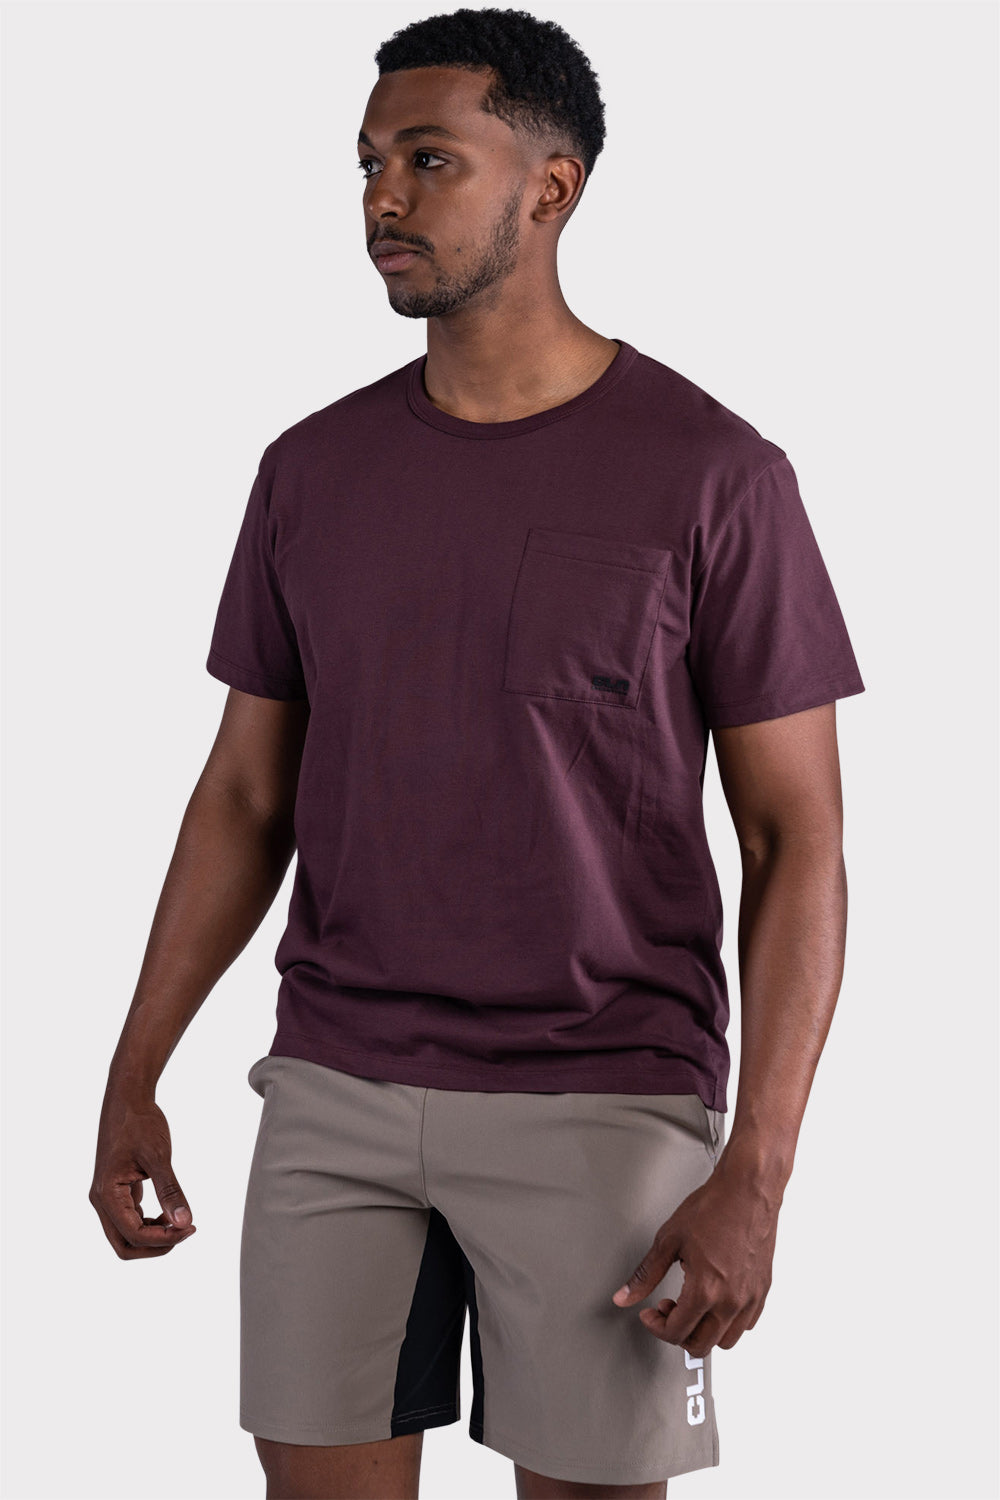 CLN Rick T-Shirt  - Vino scuro